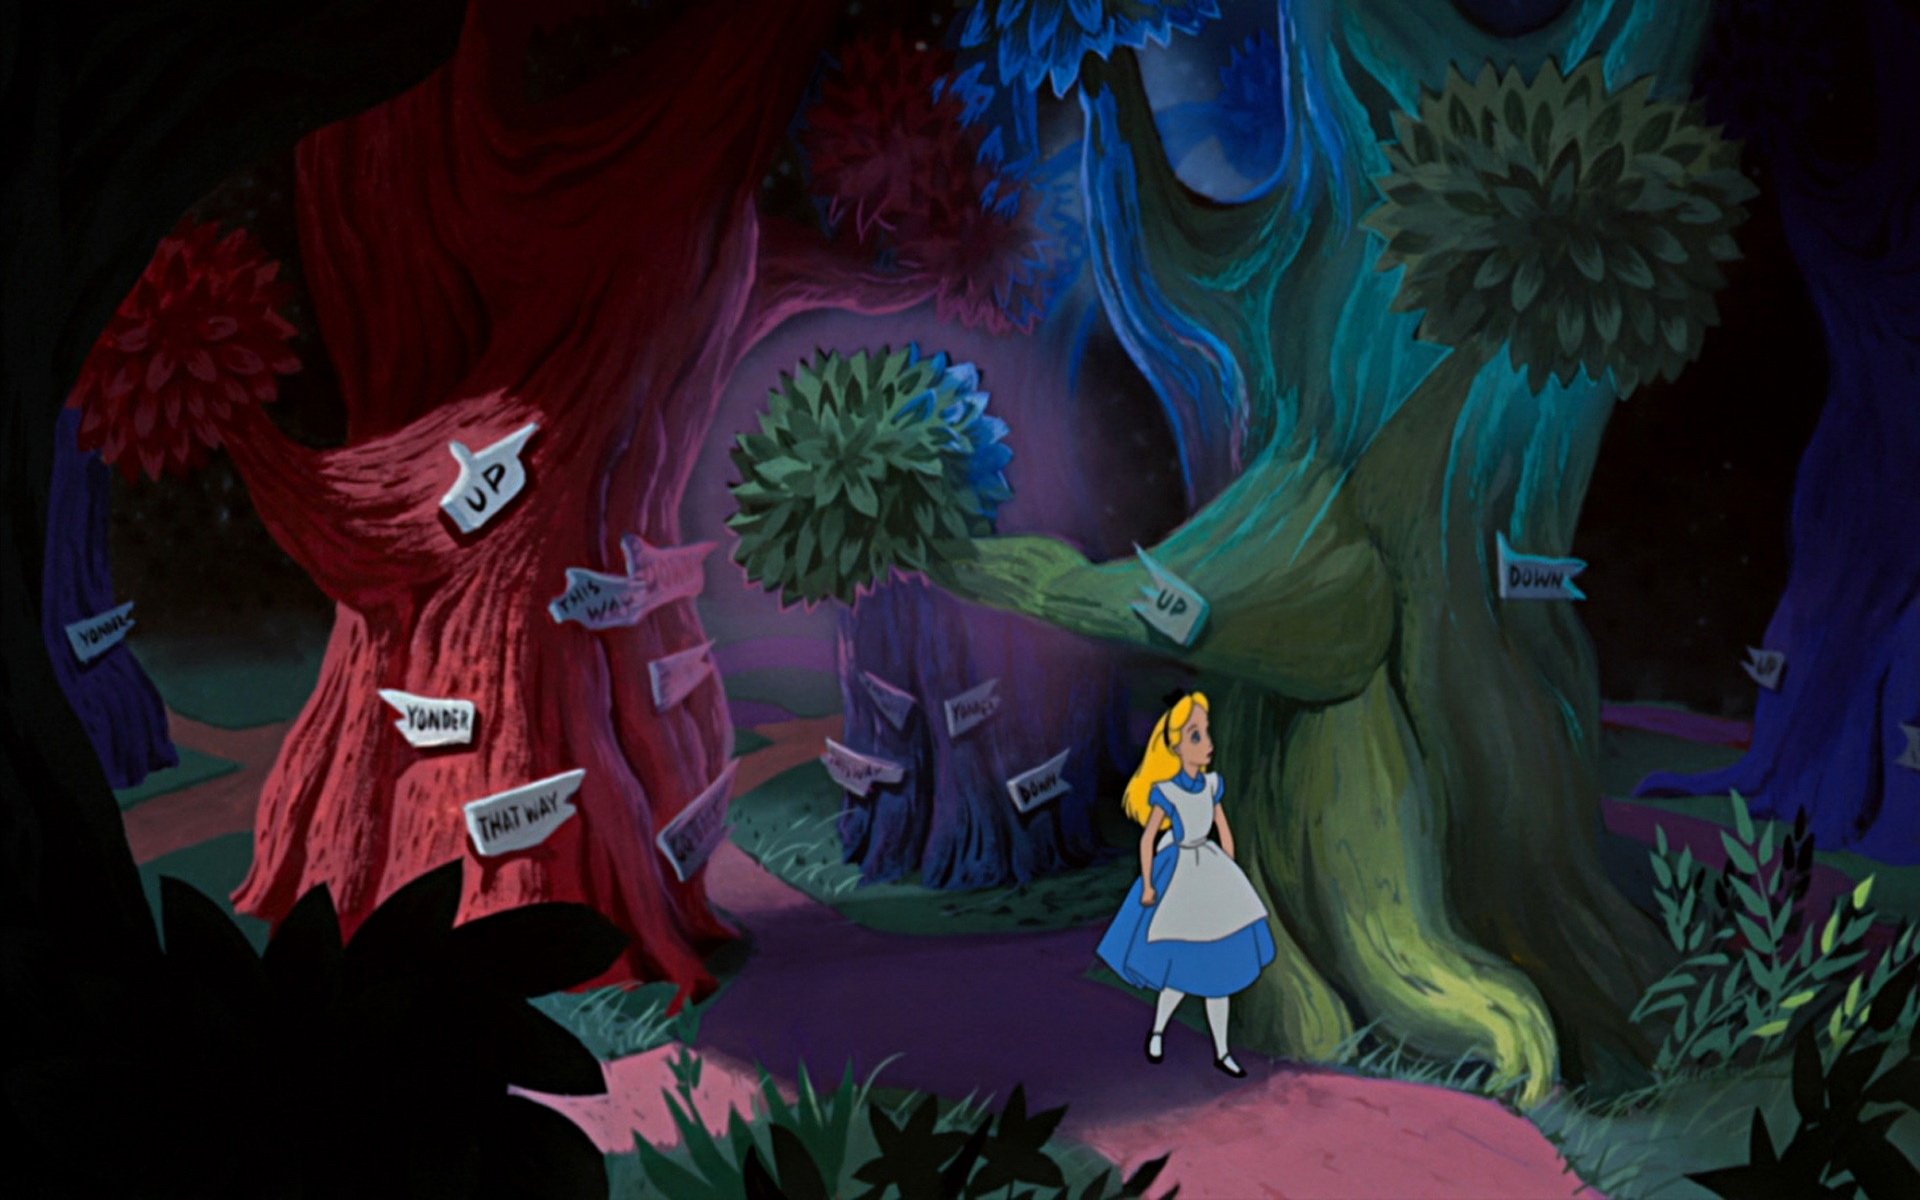 Alice In Wonderland Aesthetic Wallpapers